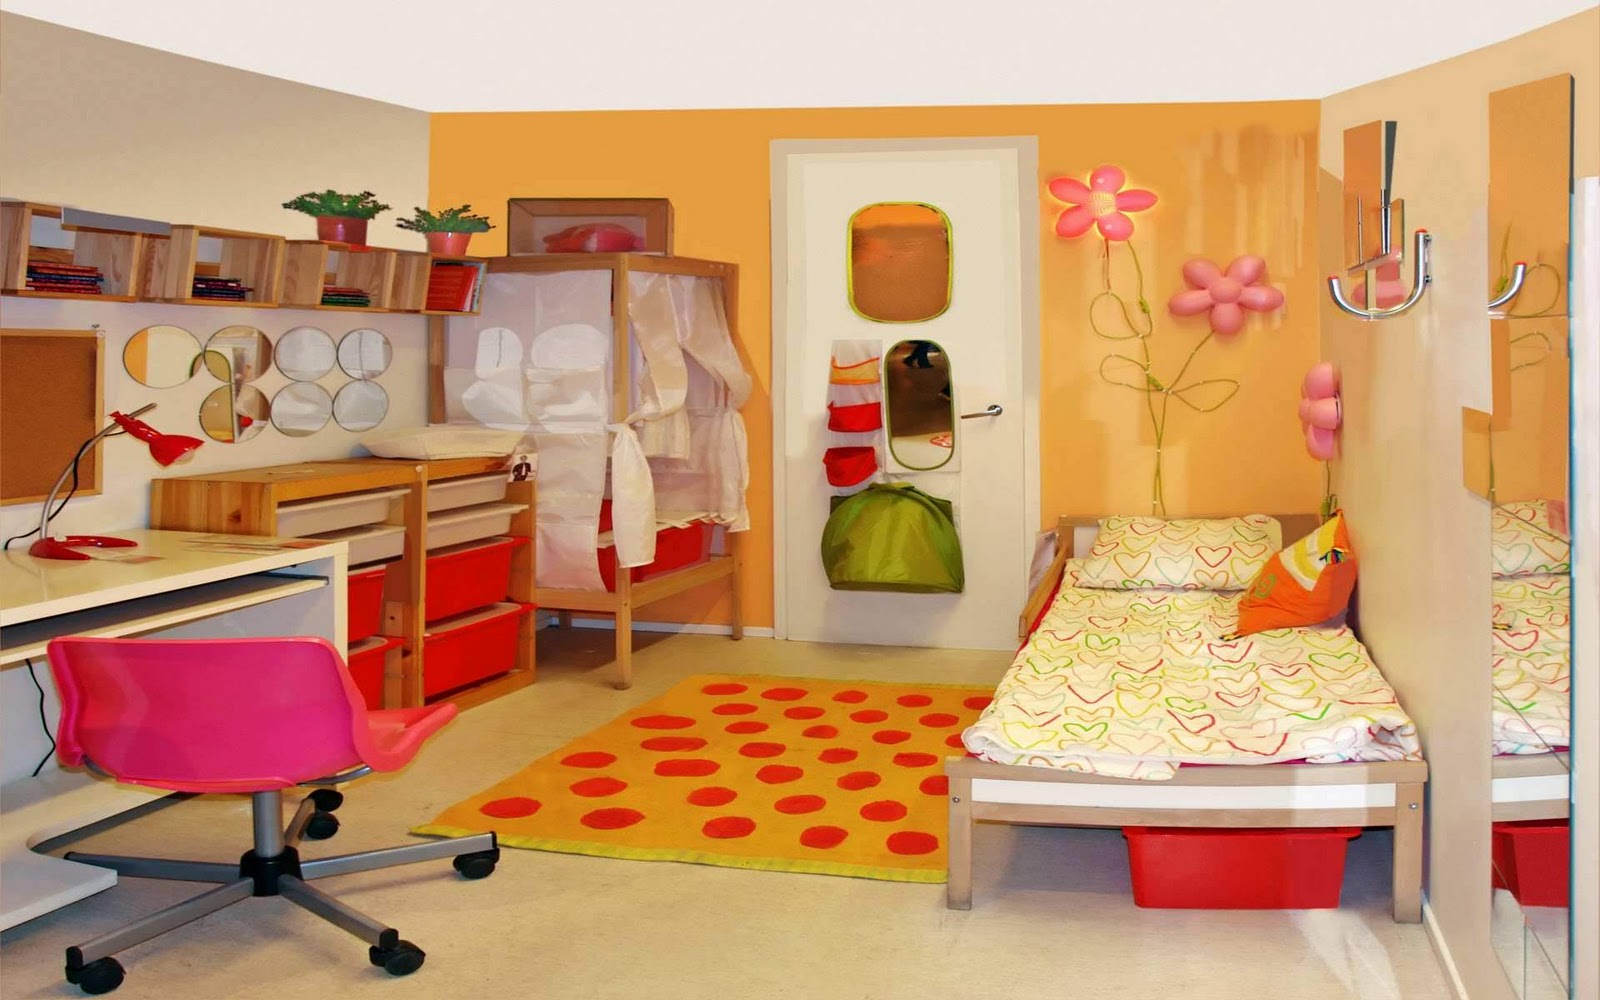 http://3.bp.blogspot.com/-cLL3xfufEvA/ToVTSEOYiLI/AAAAAAAACcc/RHAha1pm6Ok/s1600/Beautiful-Kids-Room-Home-Interior-Design-Ideas11.jpg